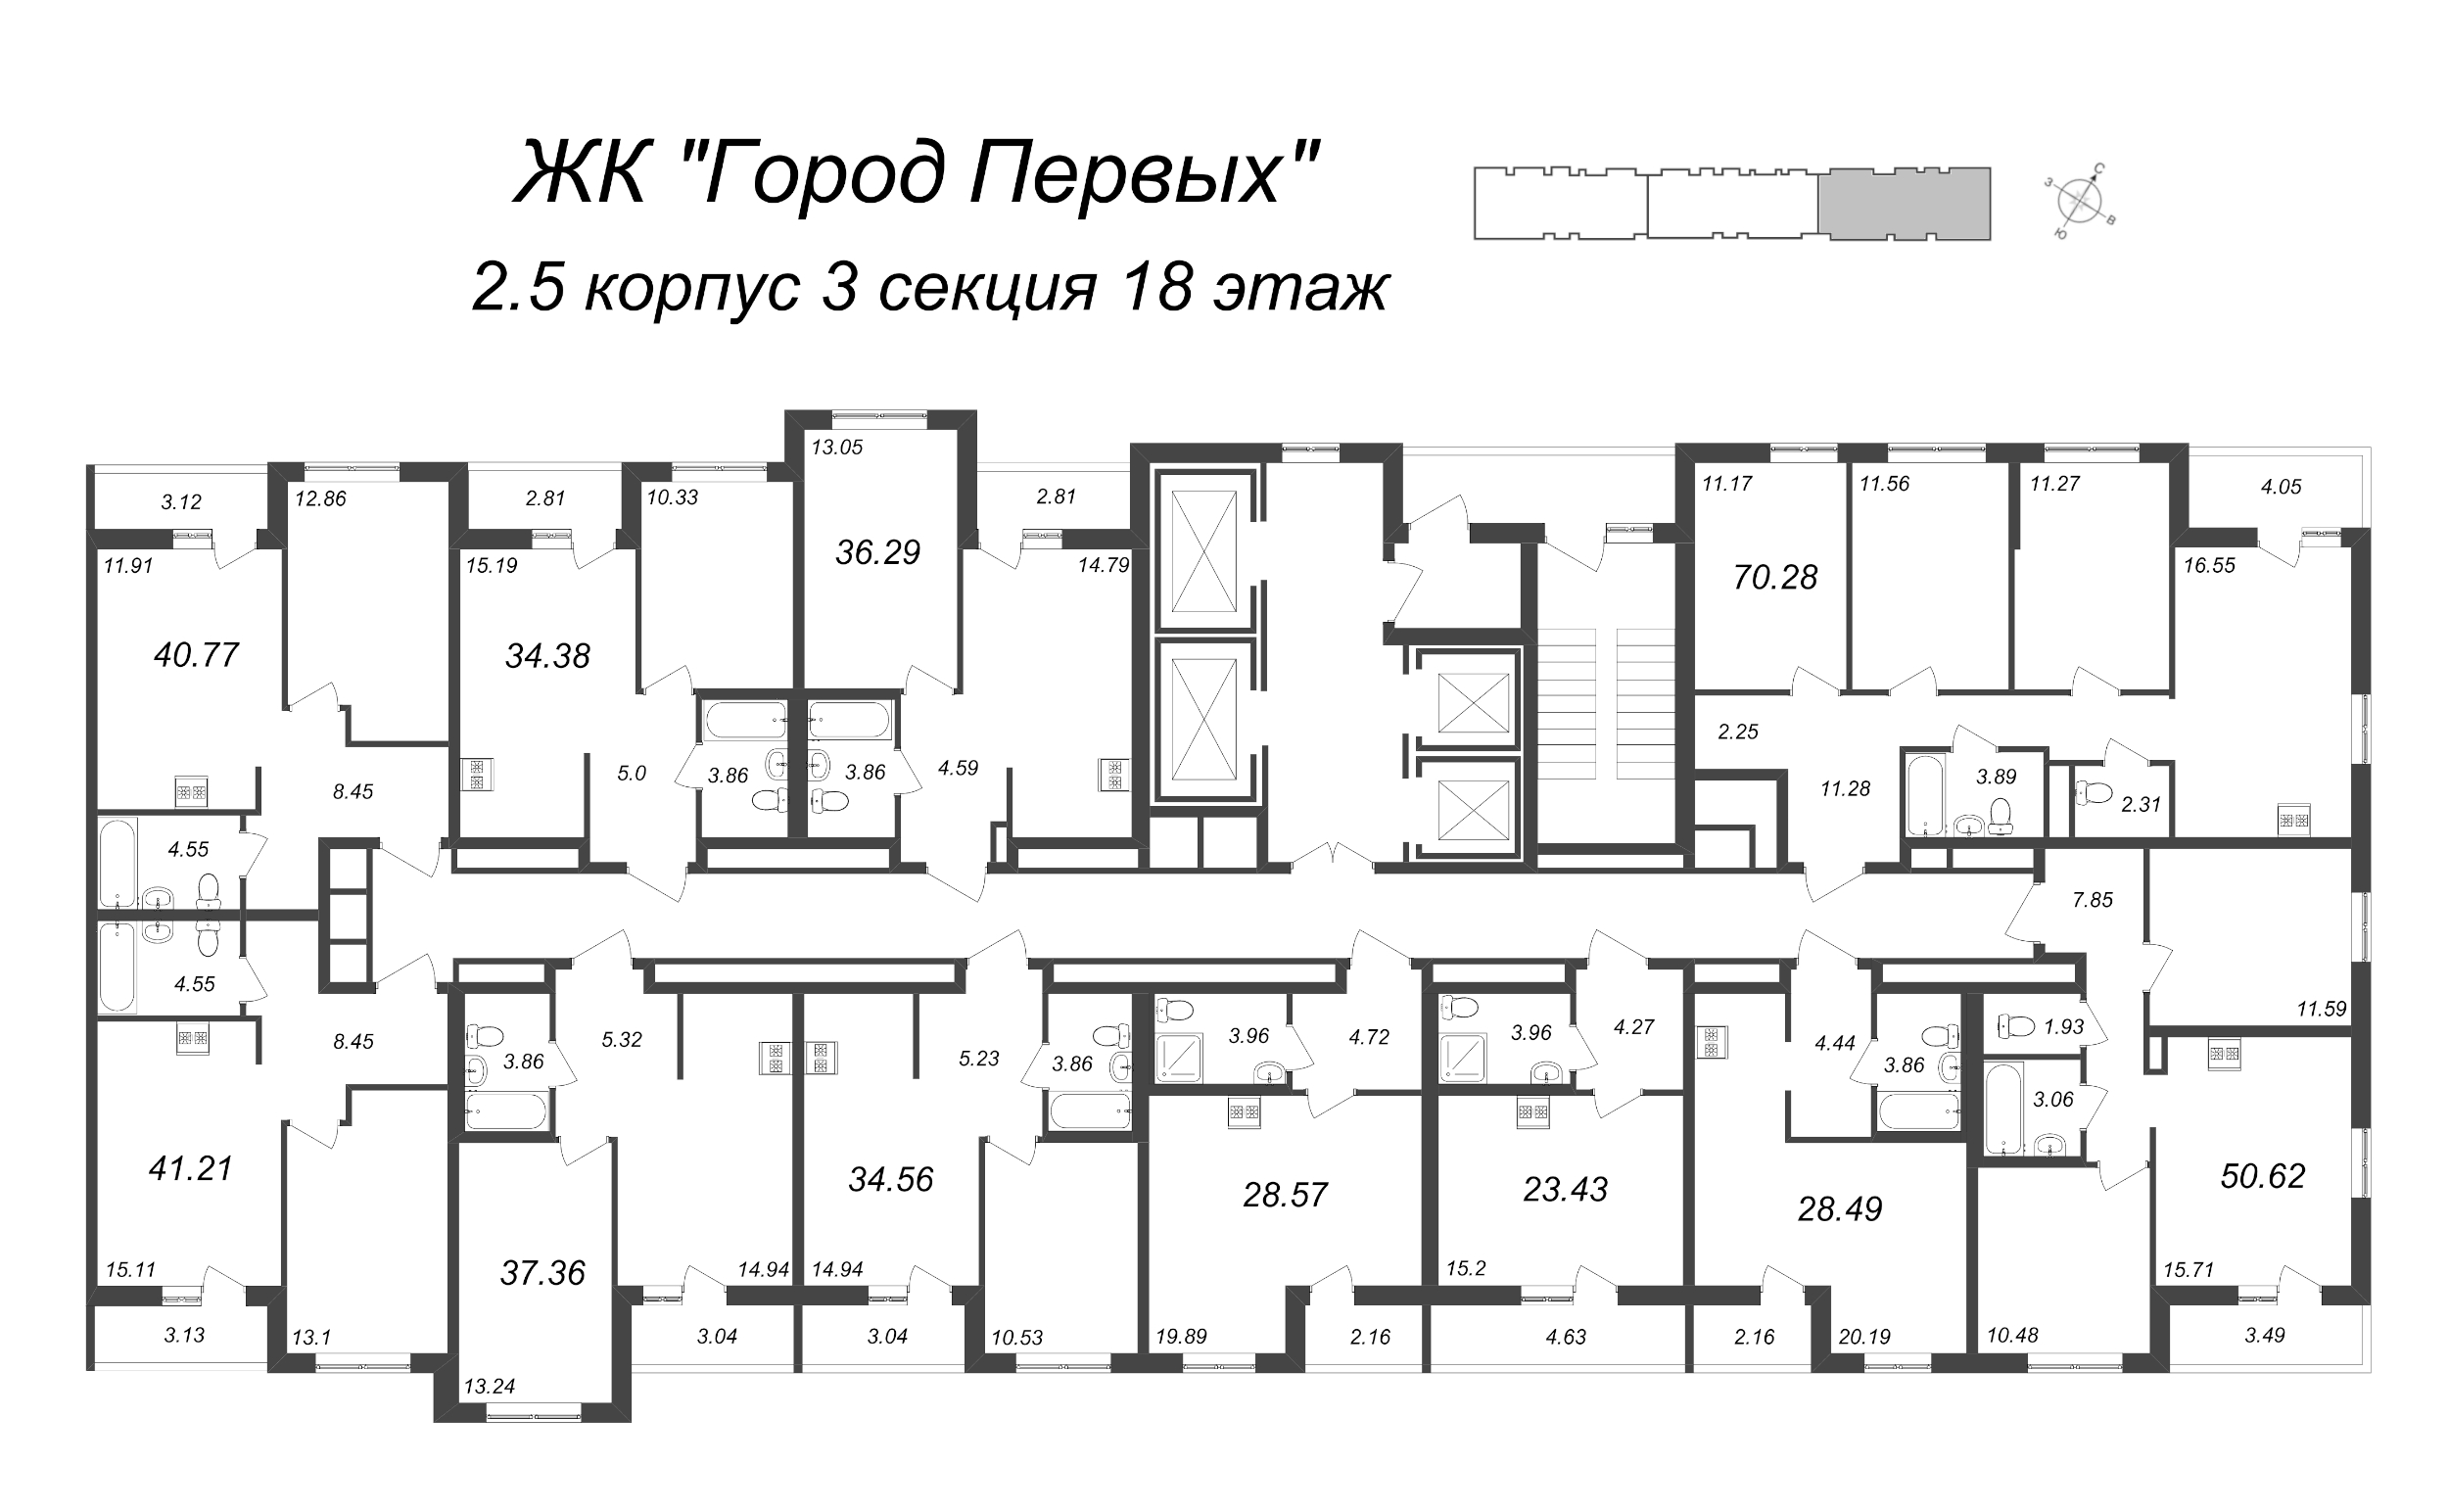 2-комнатная (Евро) квартира, 33.49 м² - планировка этажа